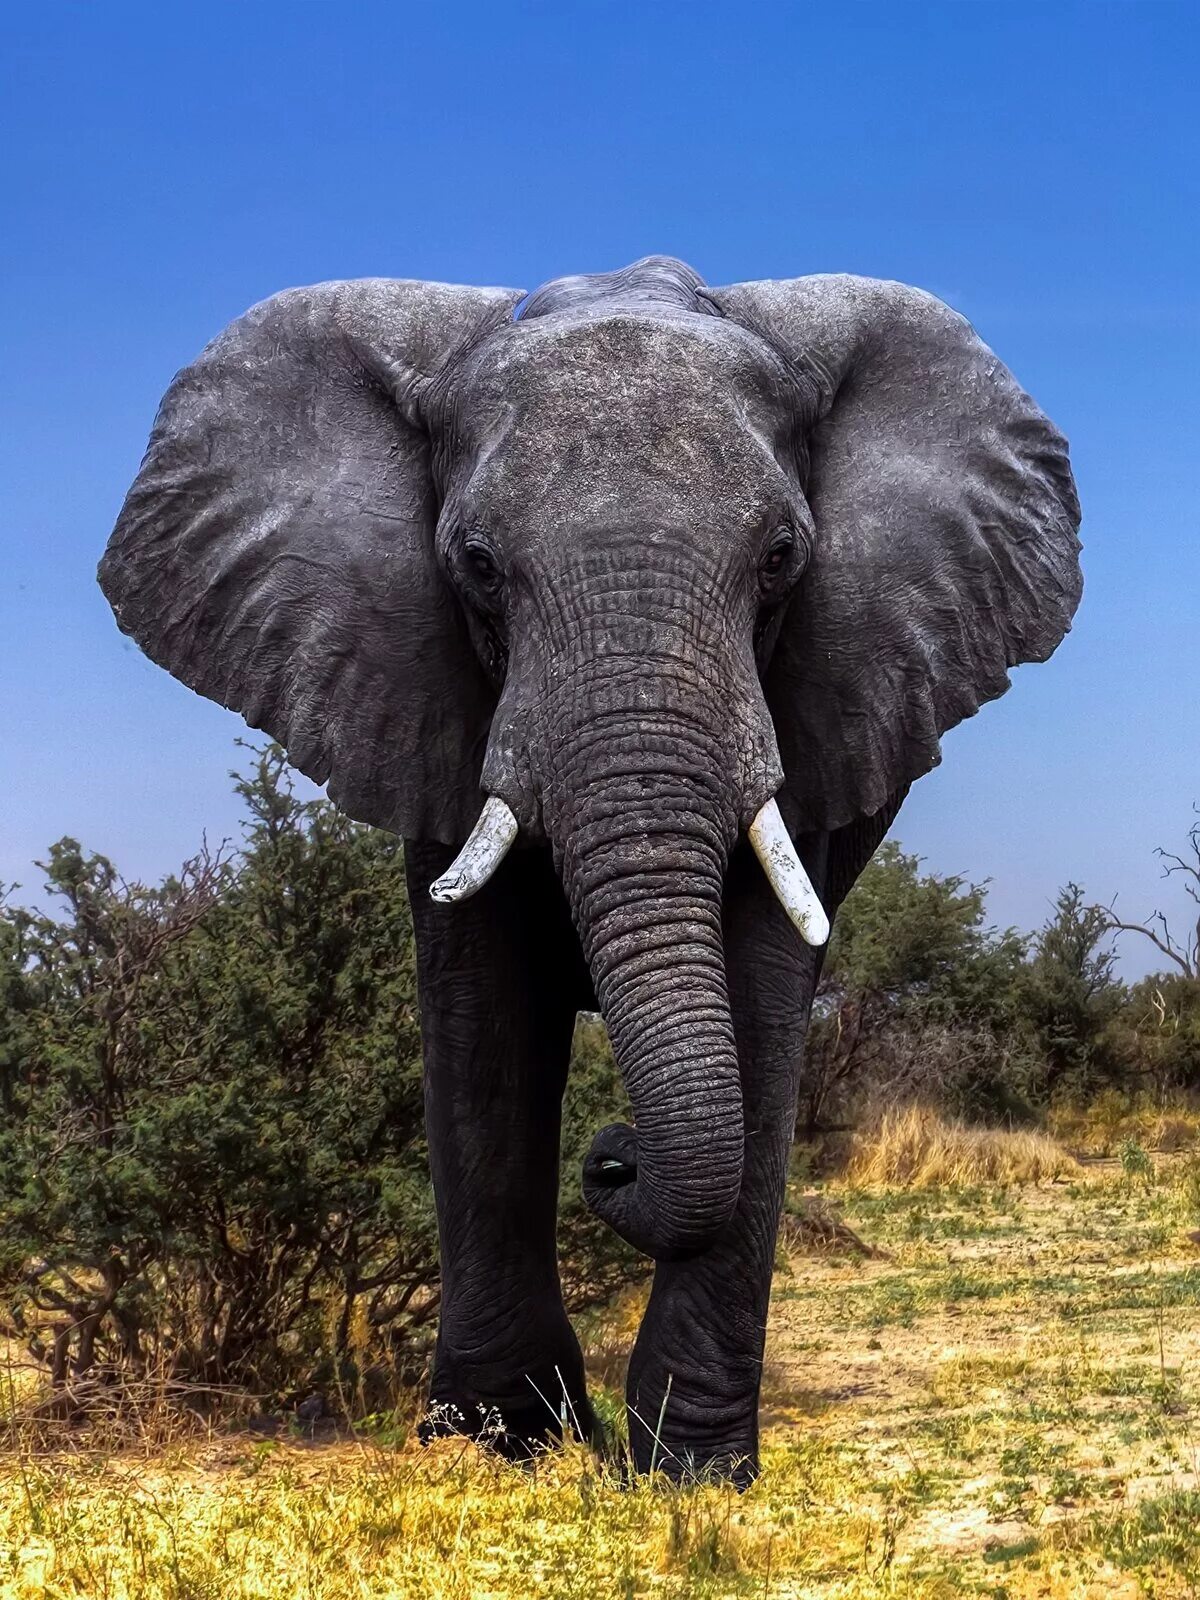 Elephant present. Саванный Африканский слон Африки. Африканский кустарниковый слон. Африканский саванский слон. 4. Африканский саванный слон.